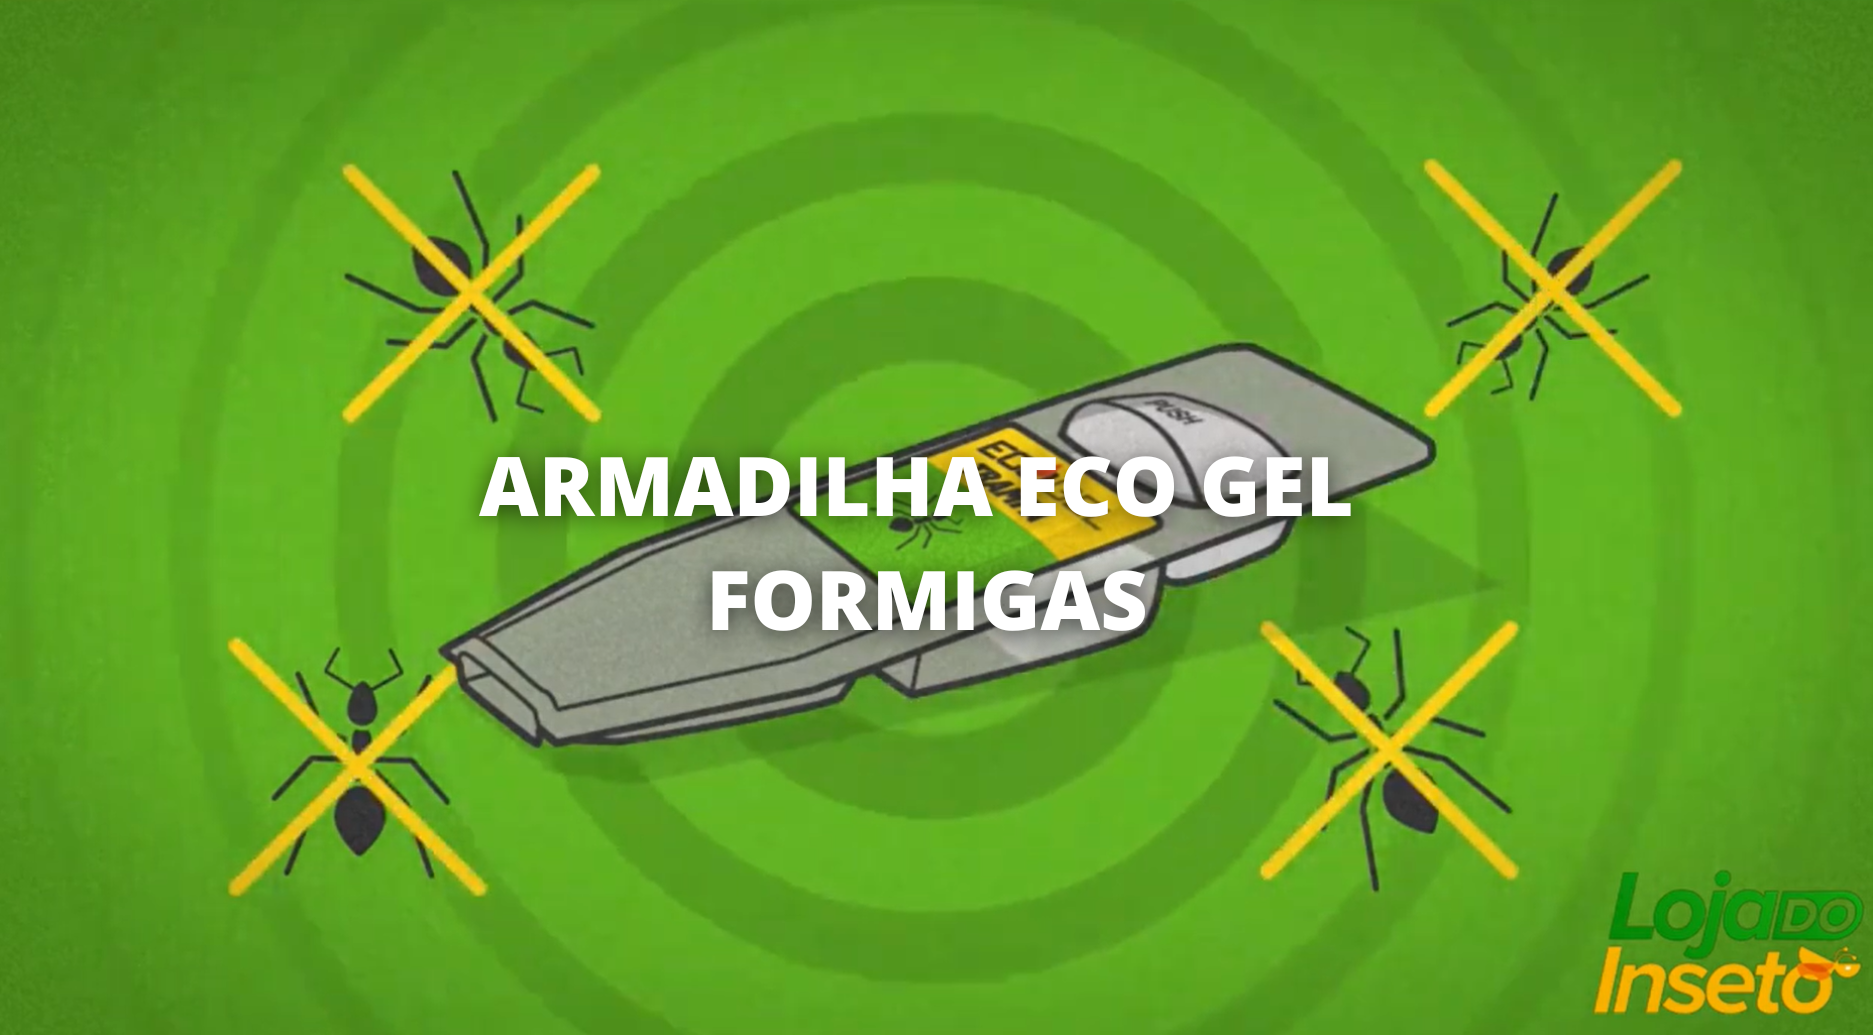 Carregar vídeo: Armadilha inseticida ecogel anti-formigas